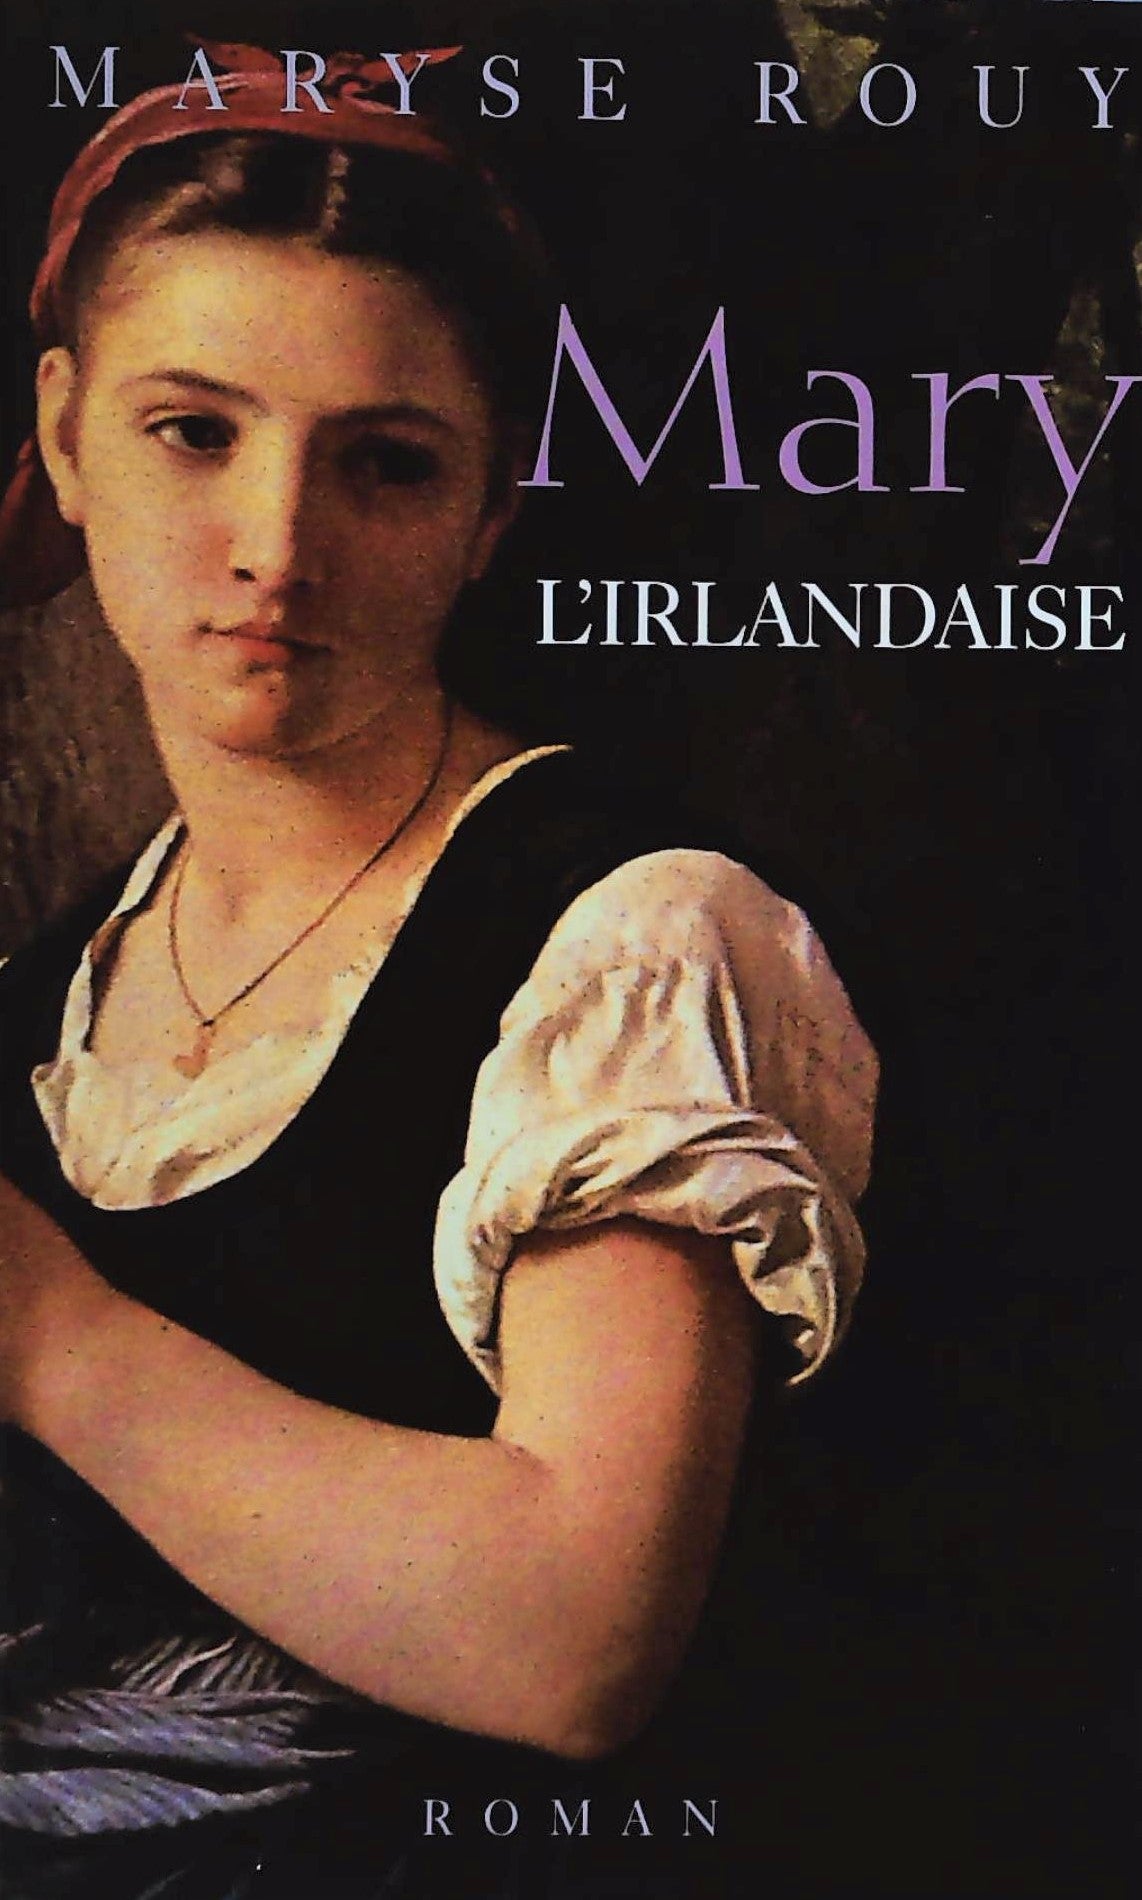 Livre ISBN 2744149985 Mary l'irlandaise (Maryse Rouy)